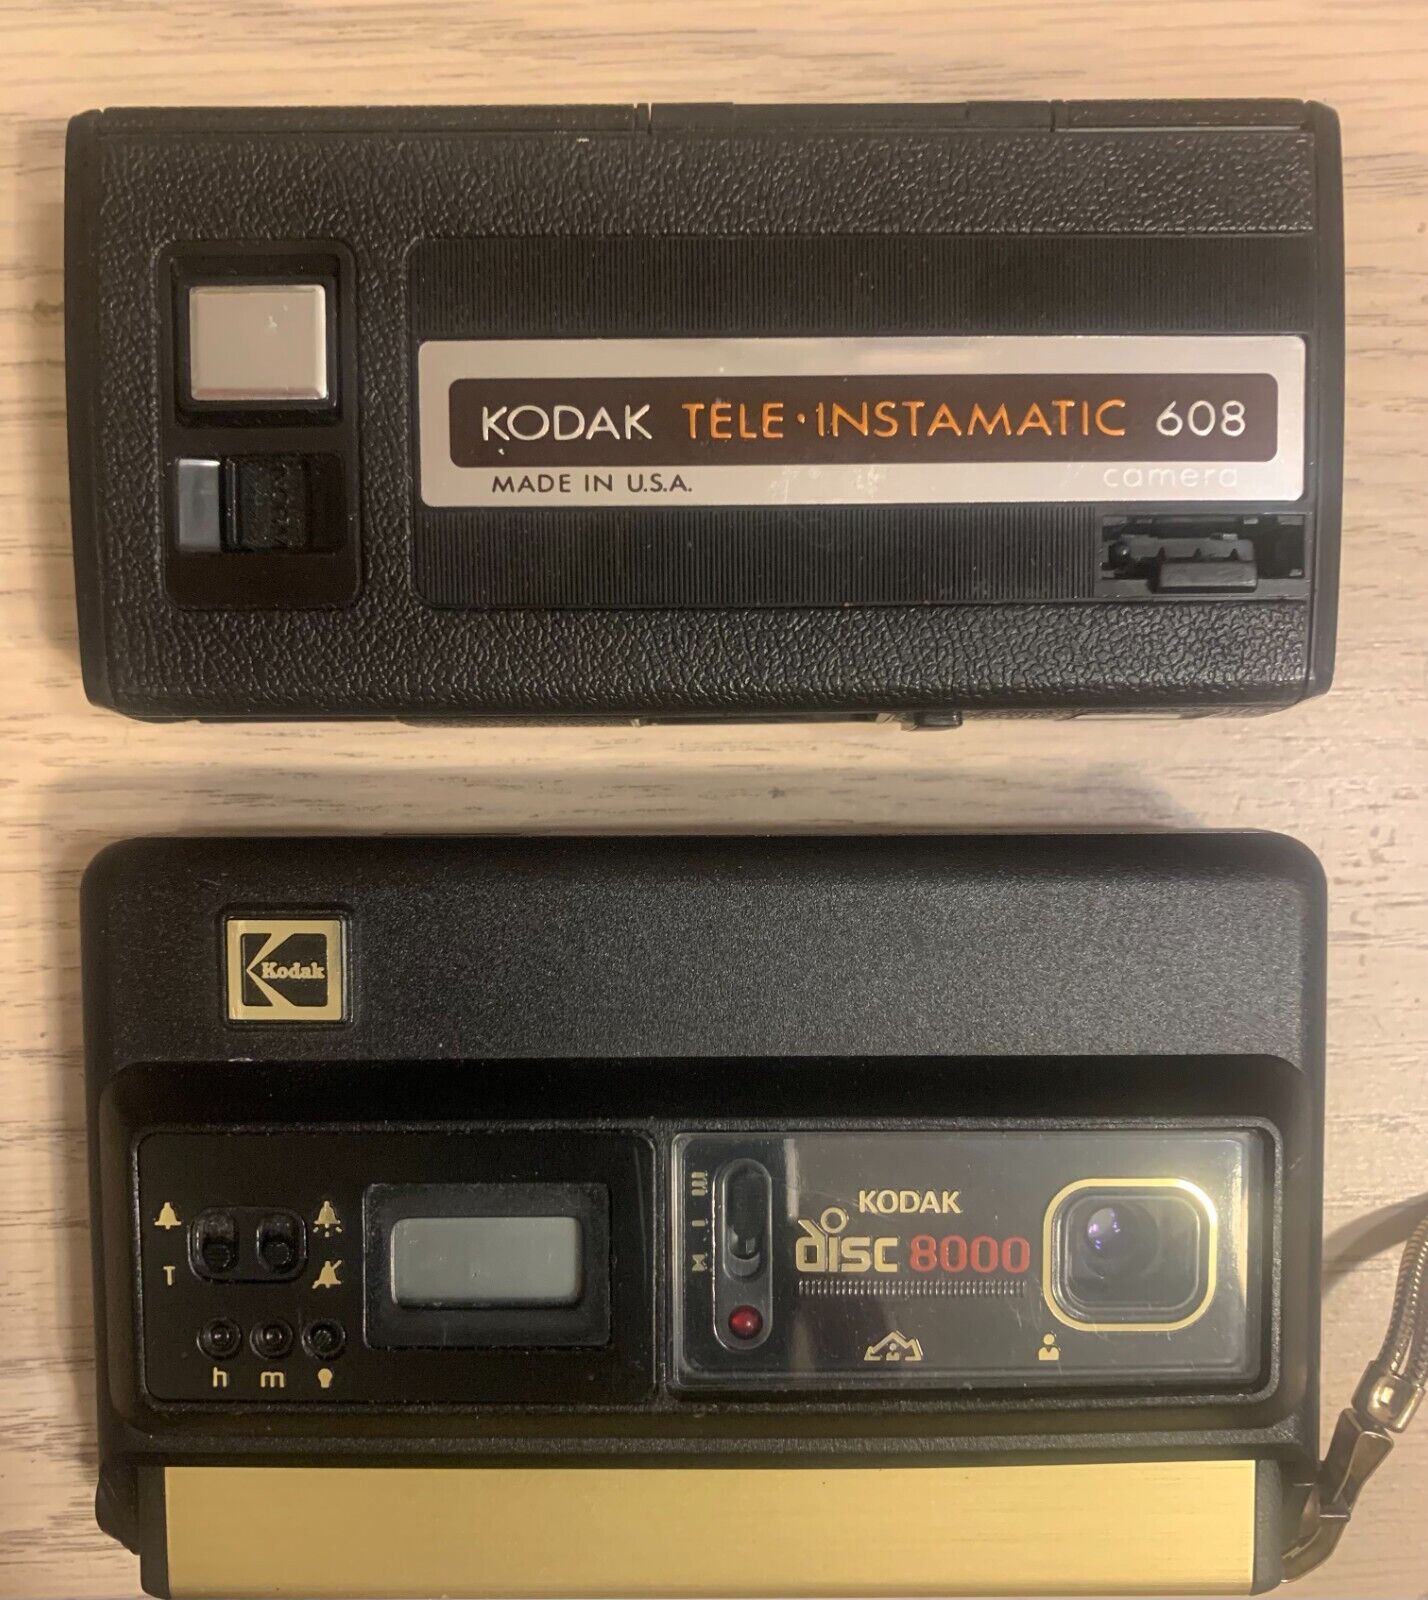 Kodak Cameras - Kodak Disc 8000 and Tele Instamatic 608 - Used Vintage Cameras